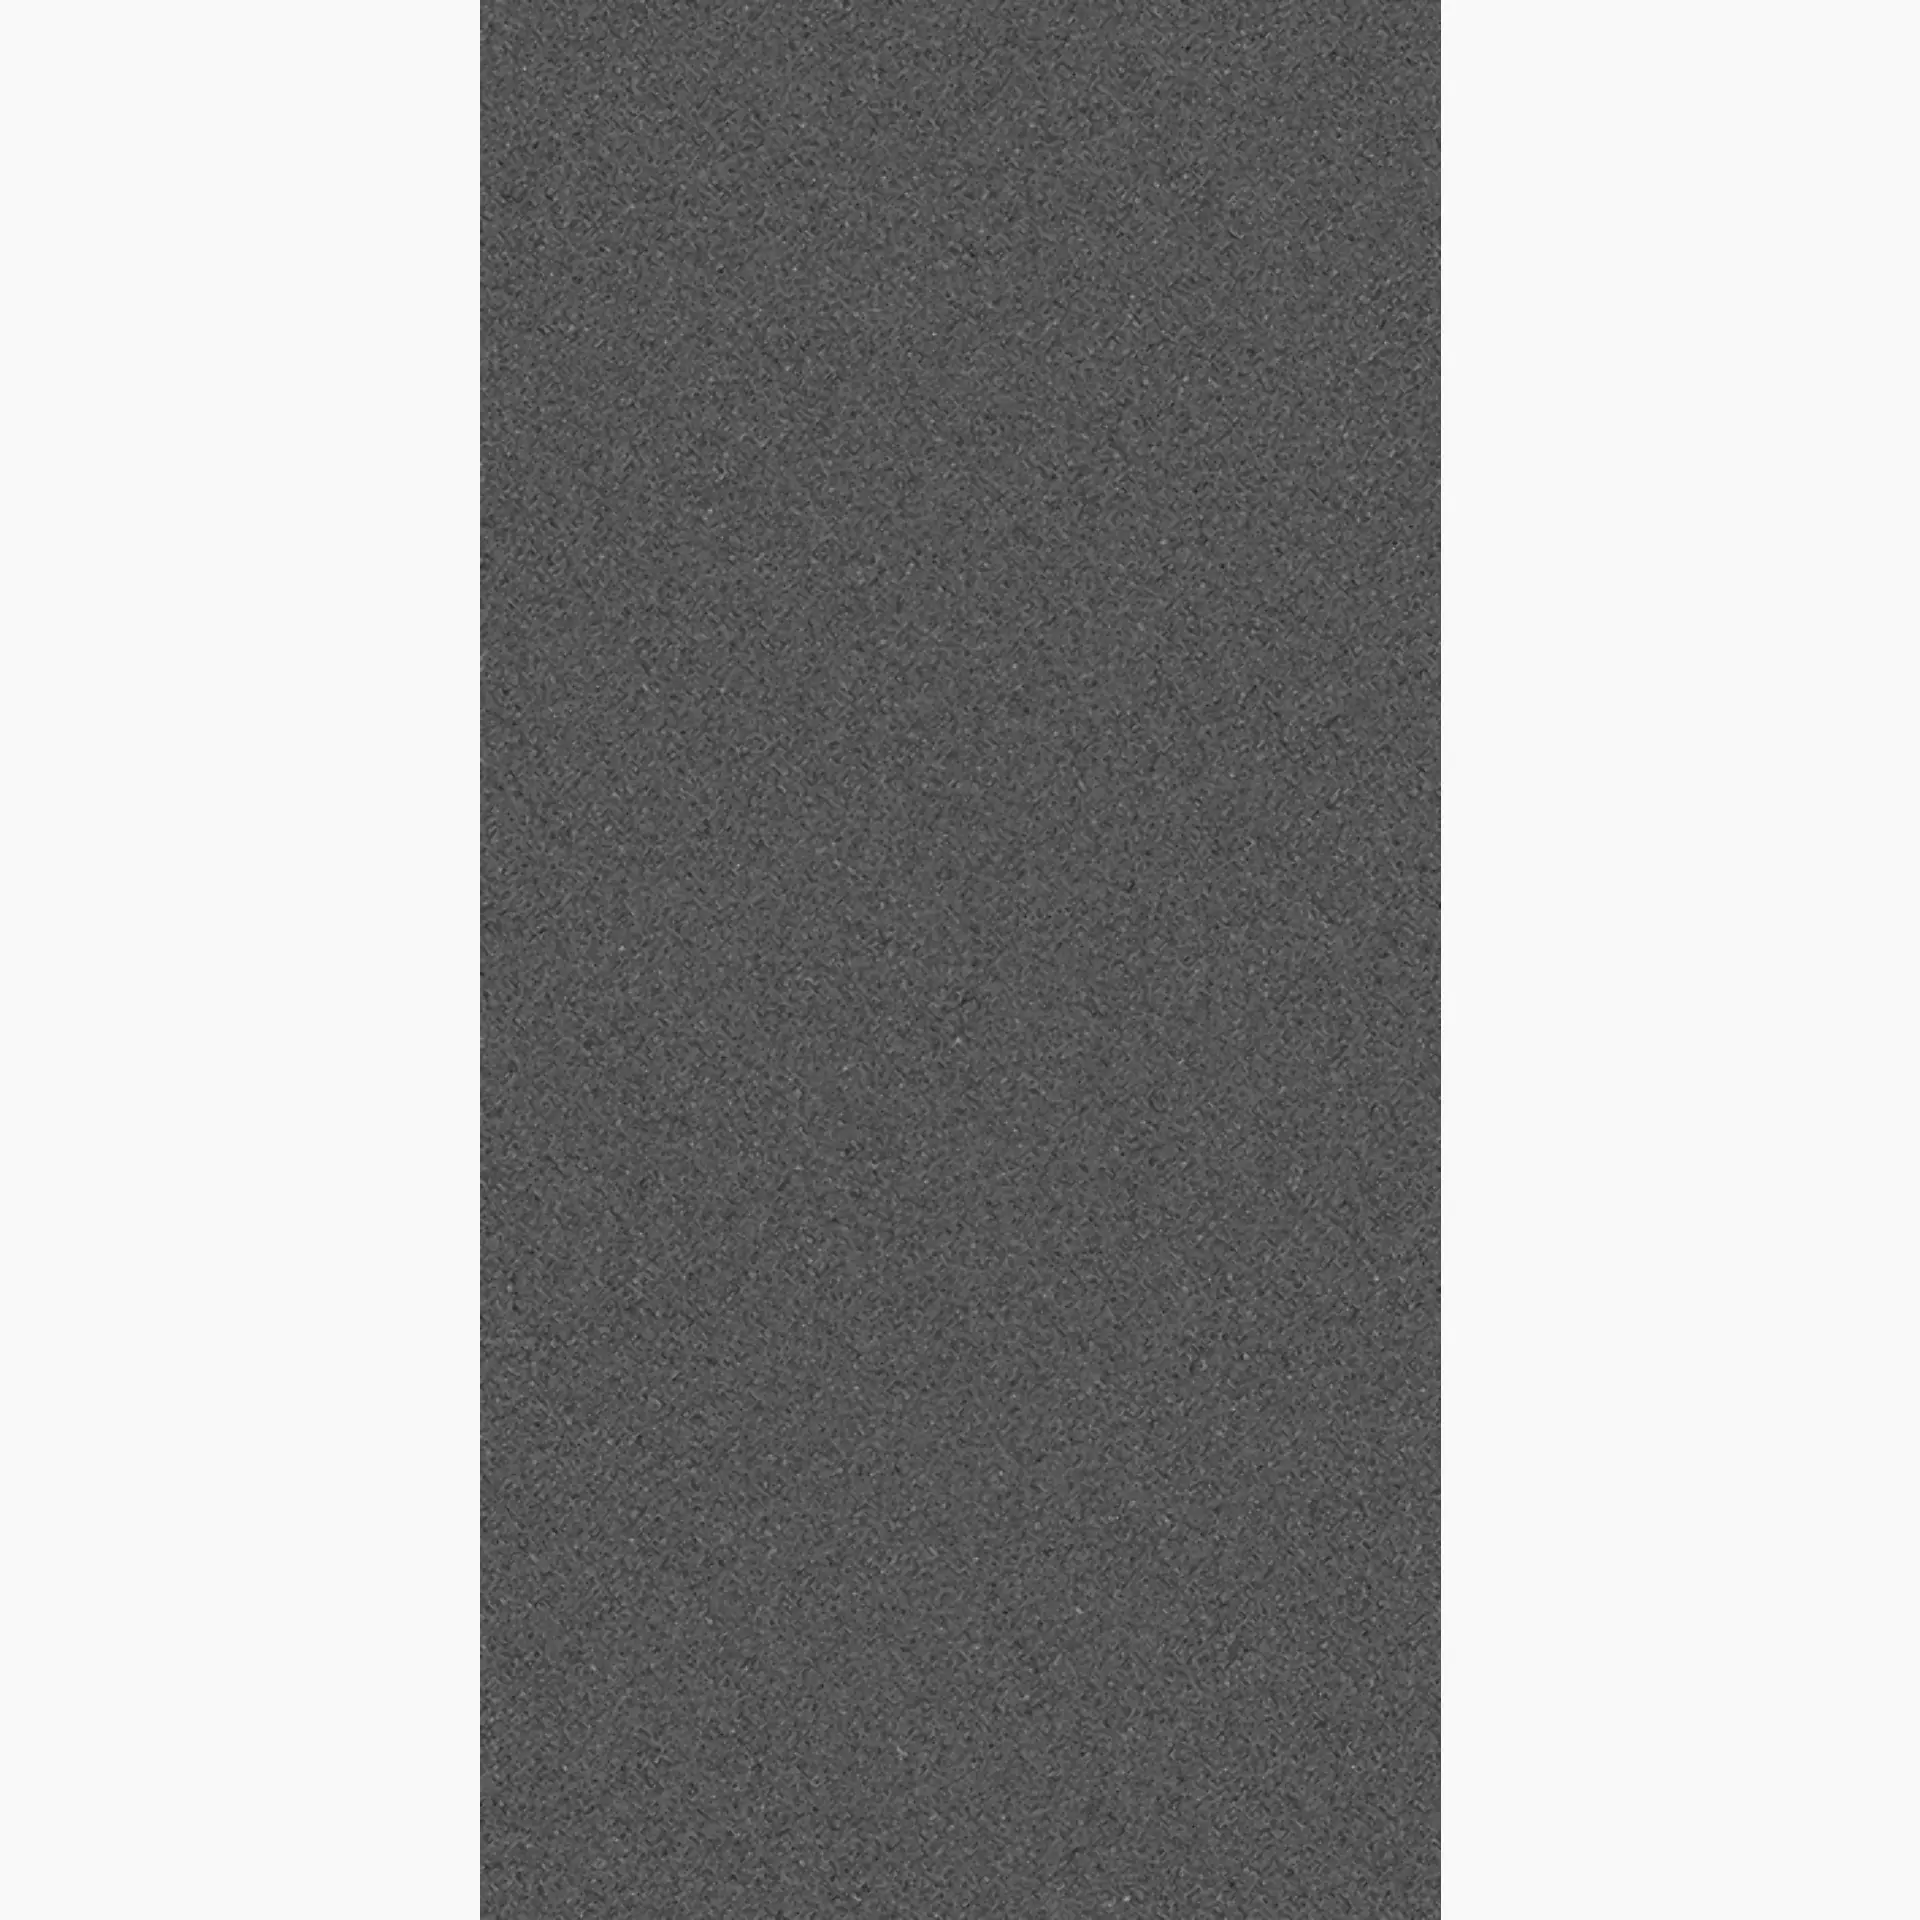 Villeroy & Boch Pure Line 2.0 Asphalt Grey Matt 2754-UL90 30x60cm rectified 12mm